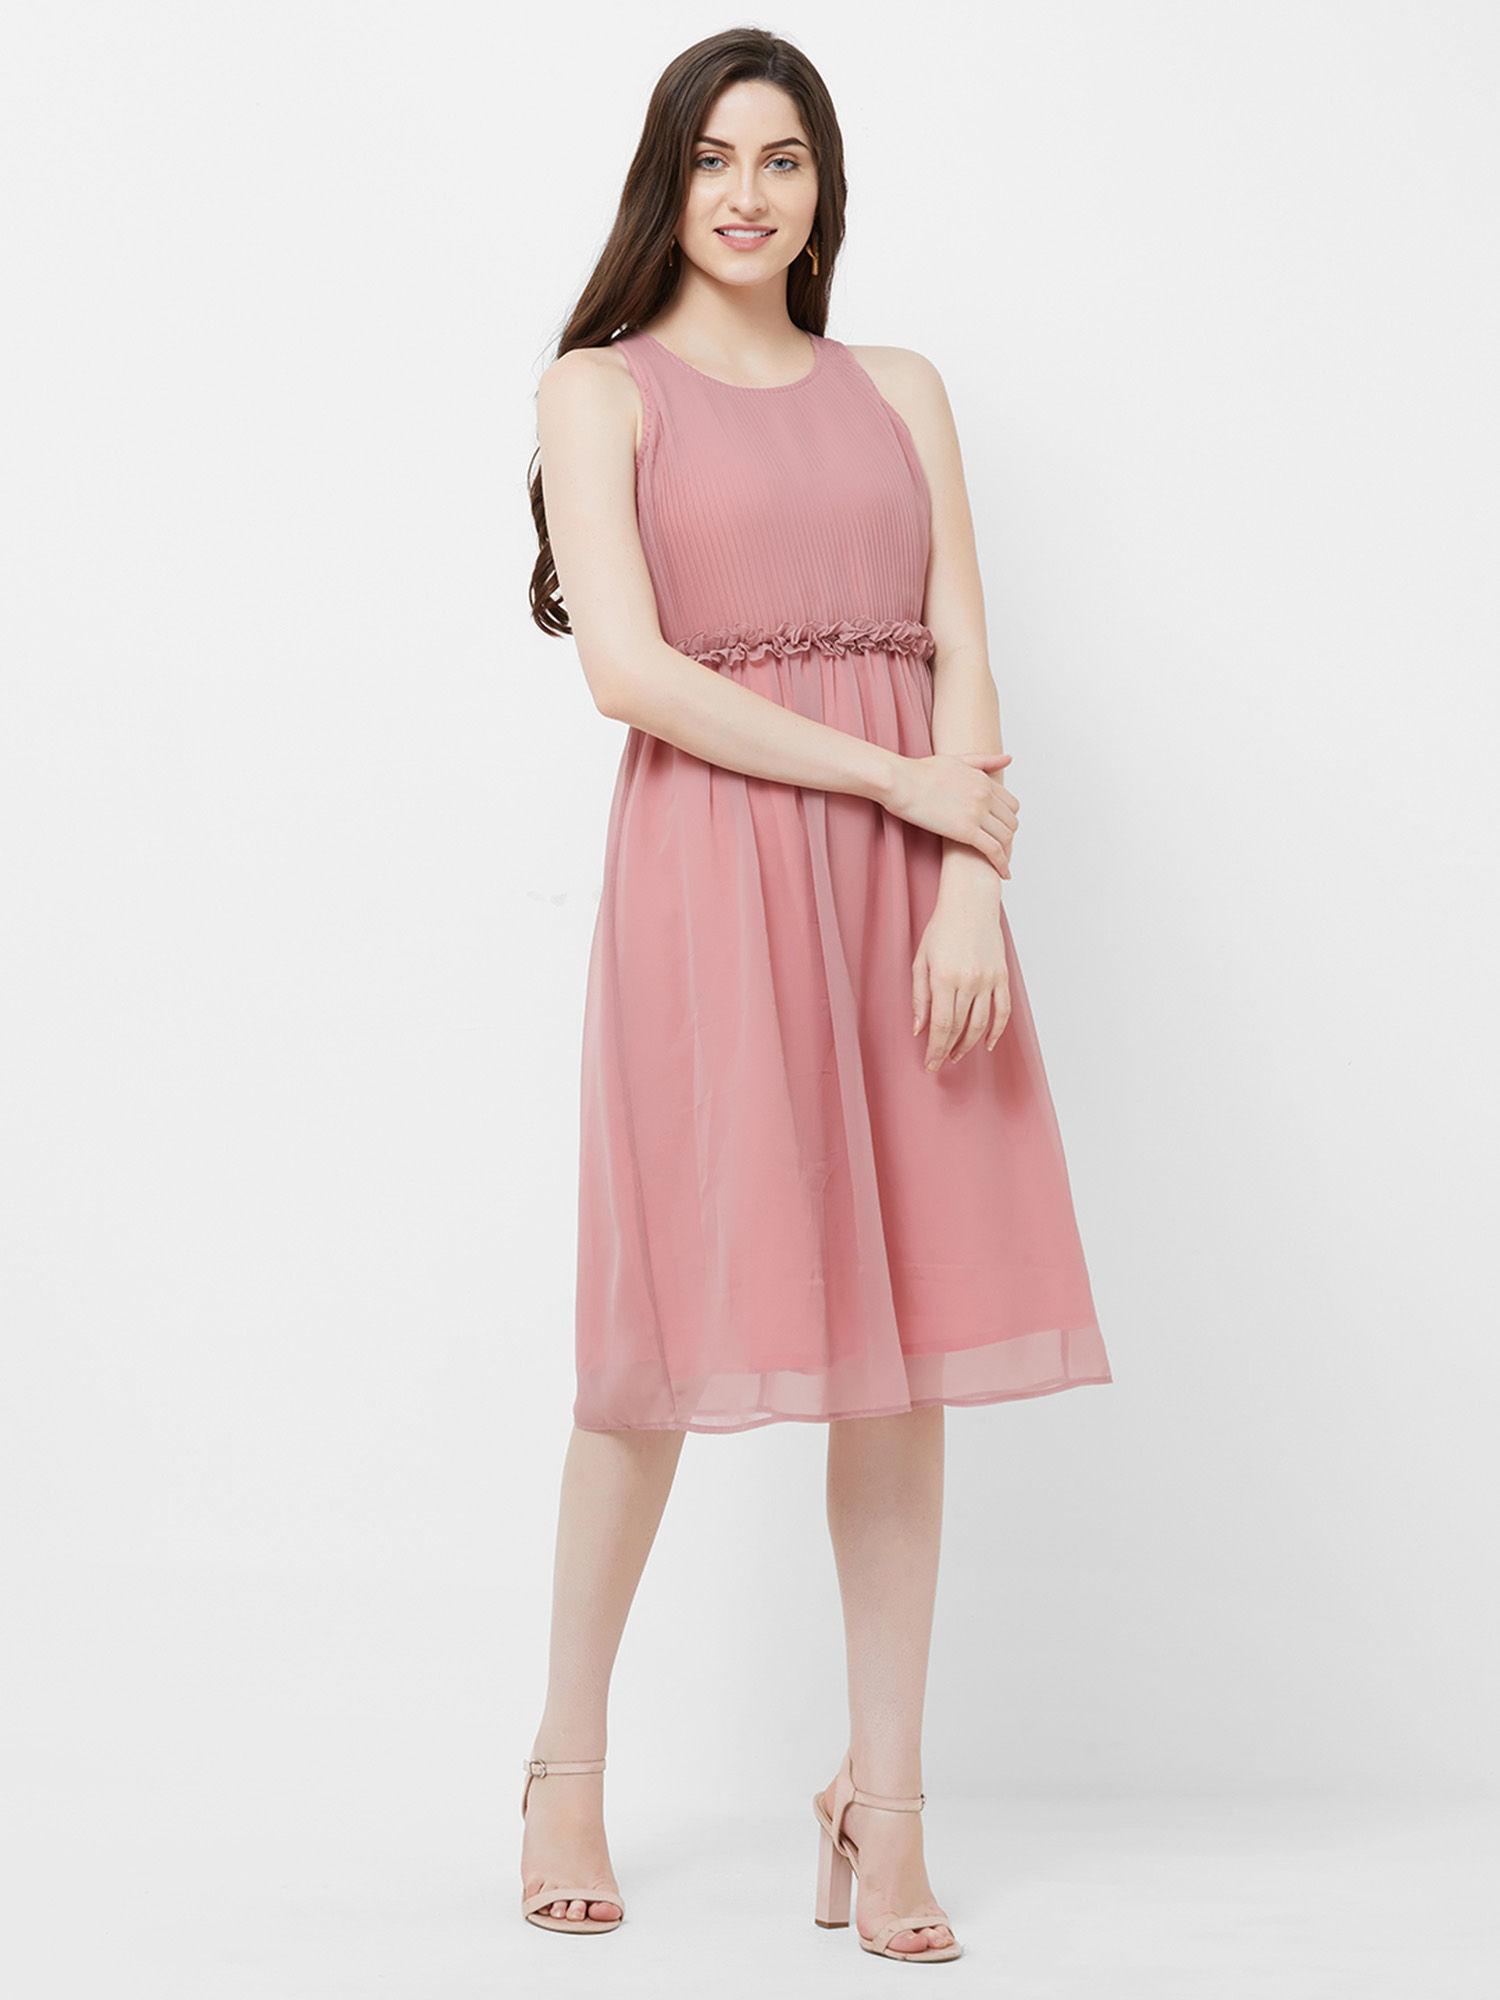 pink sleeveless dress